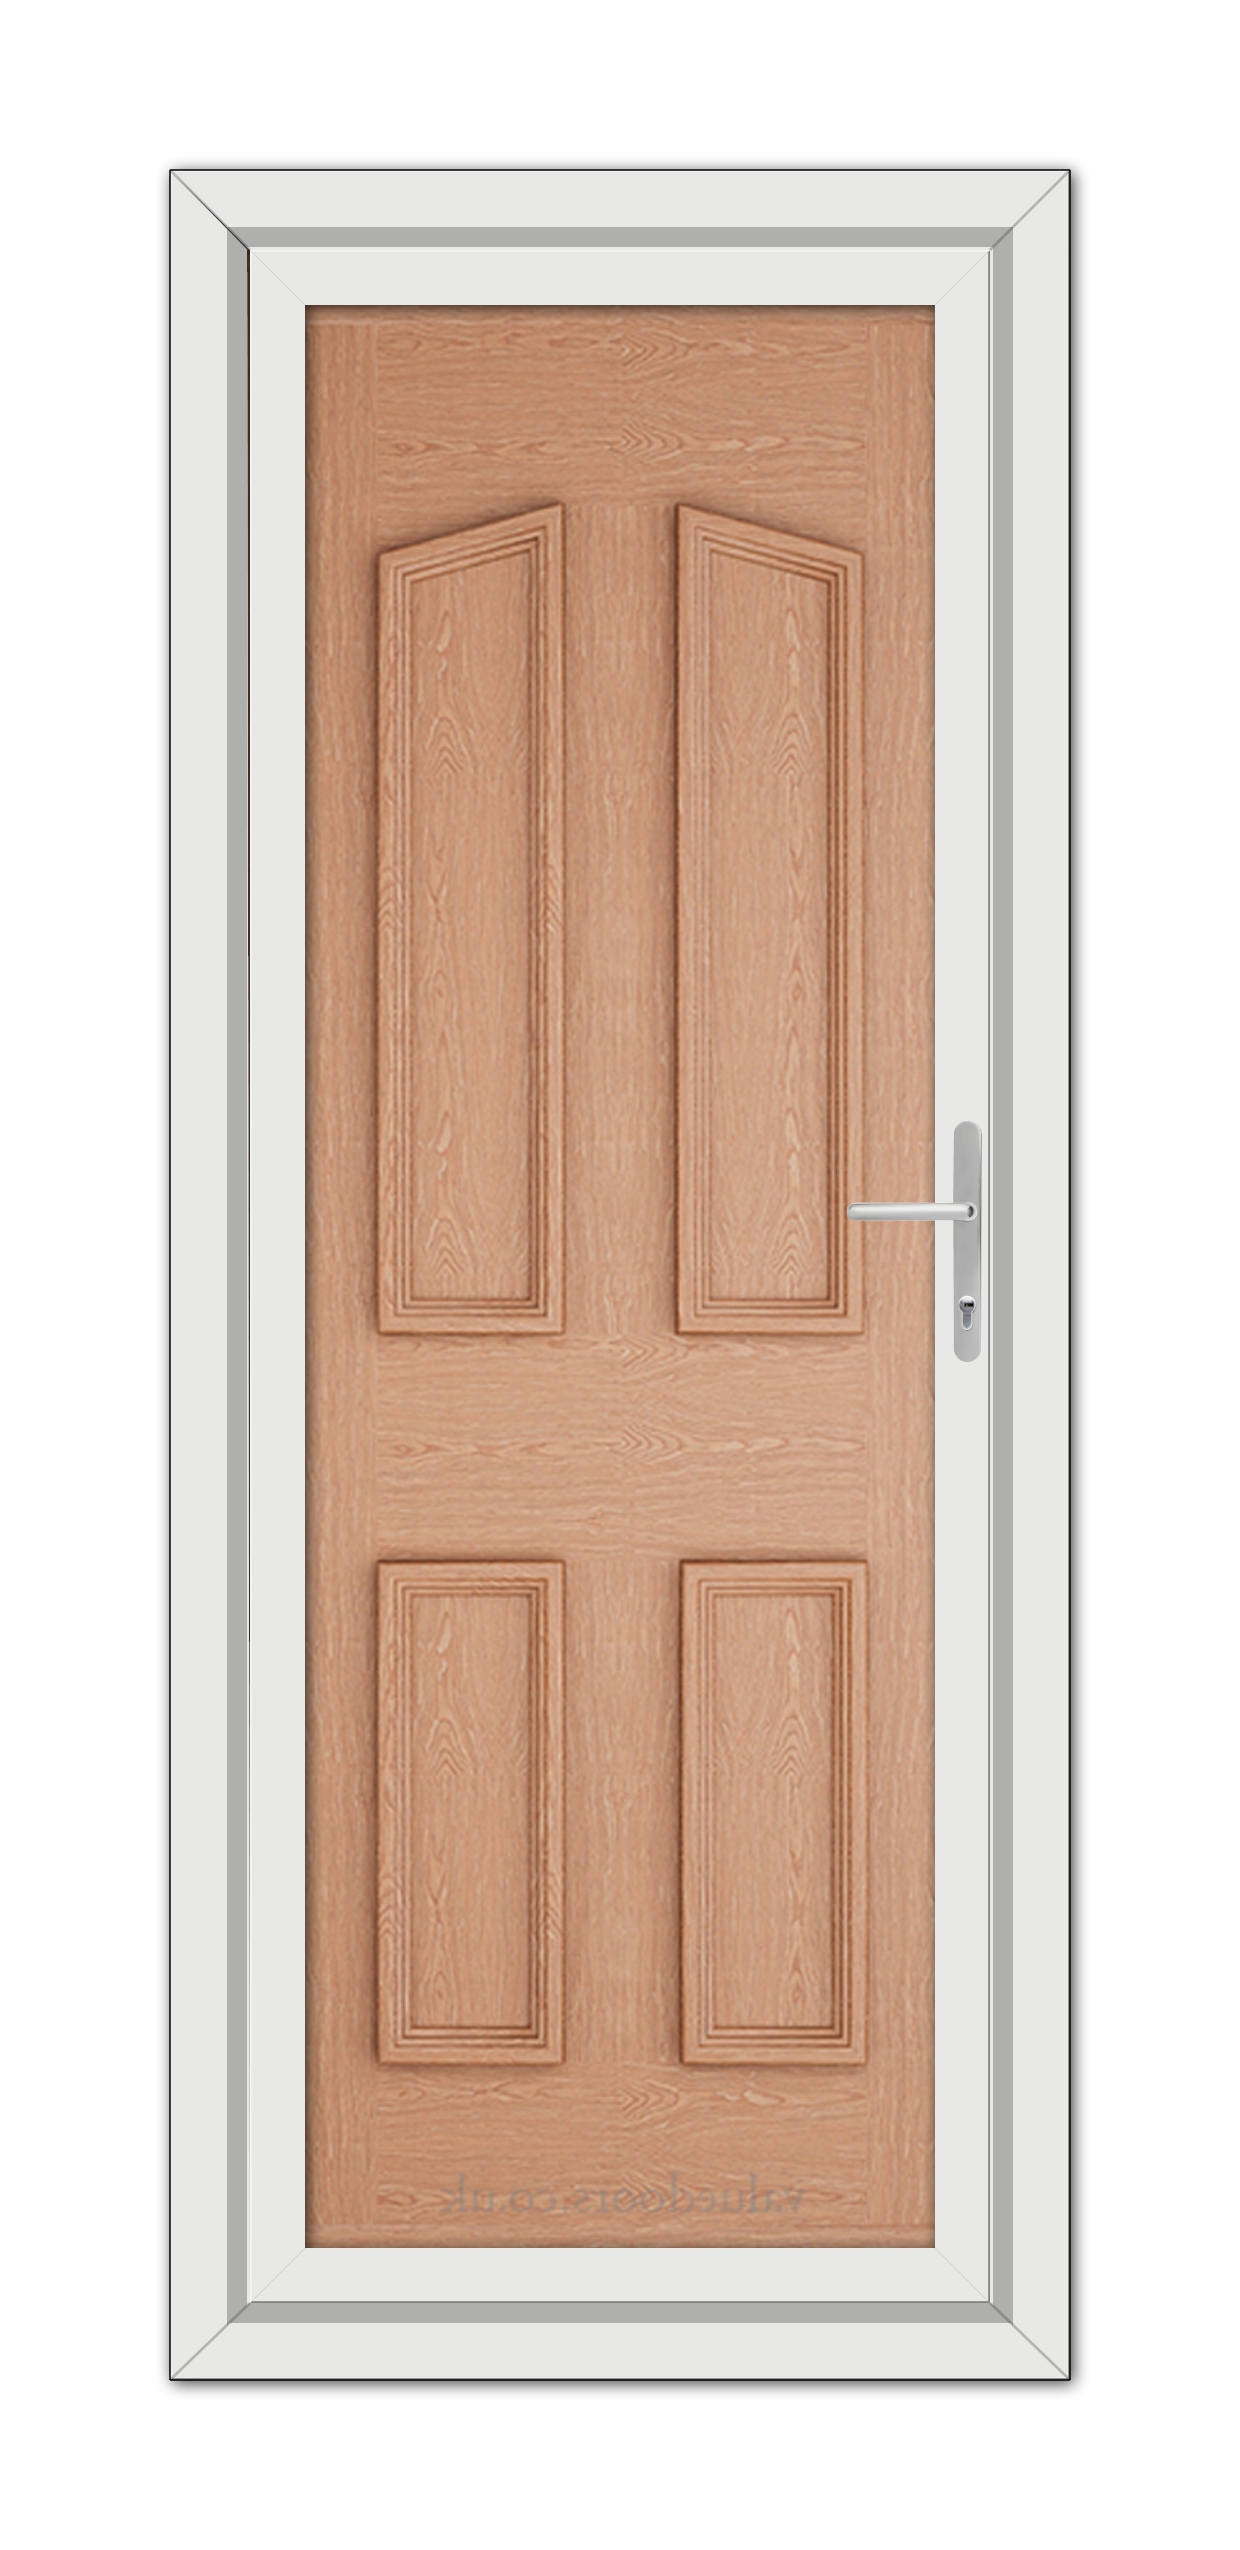 A close-up of an Irish Oak Kensington Solid uPVC Door.